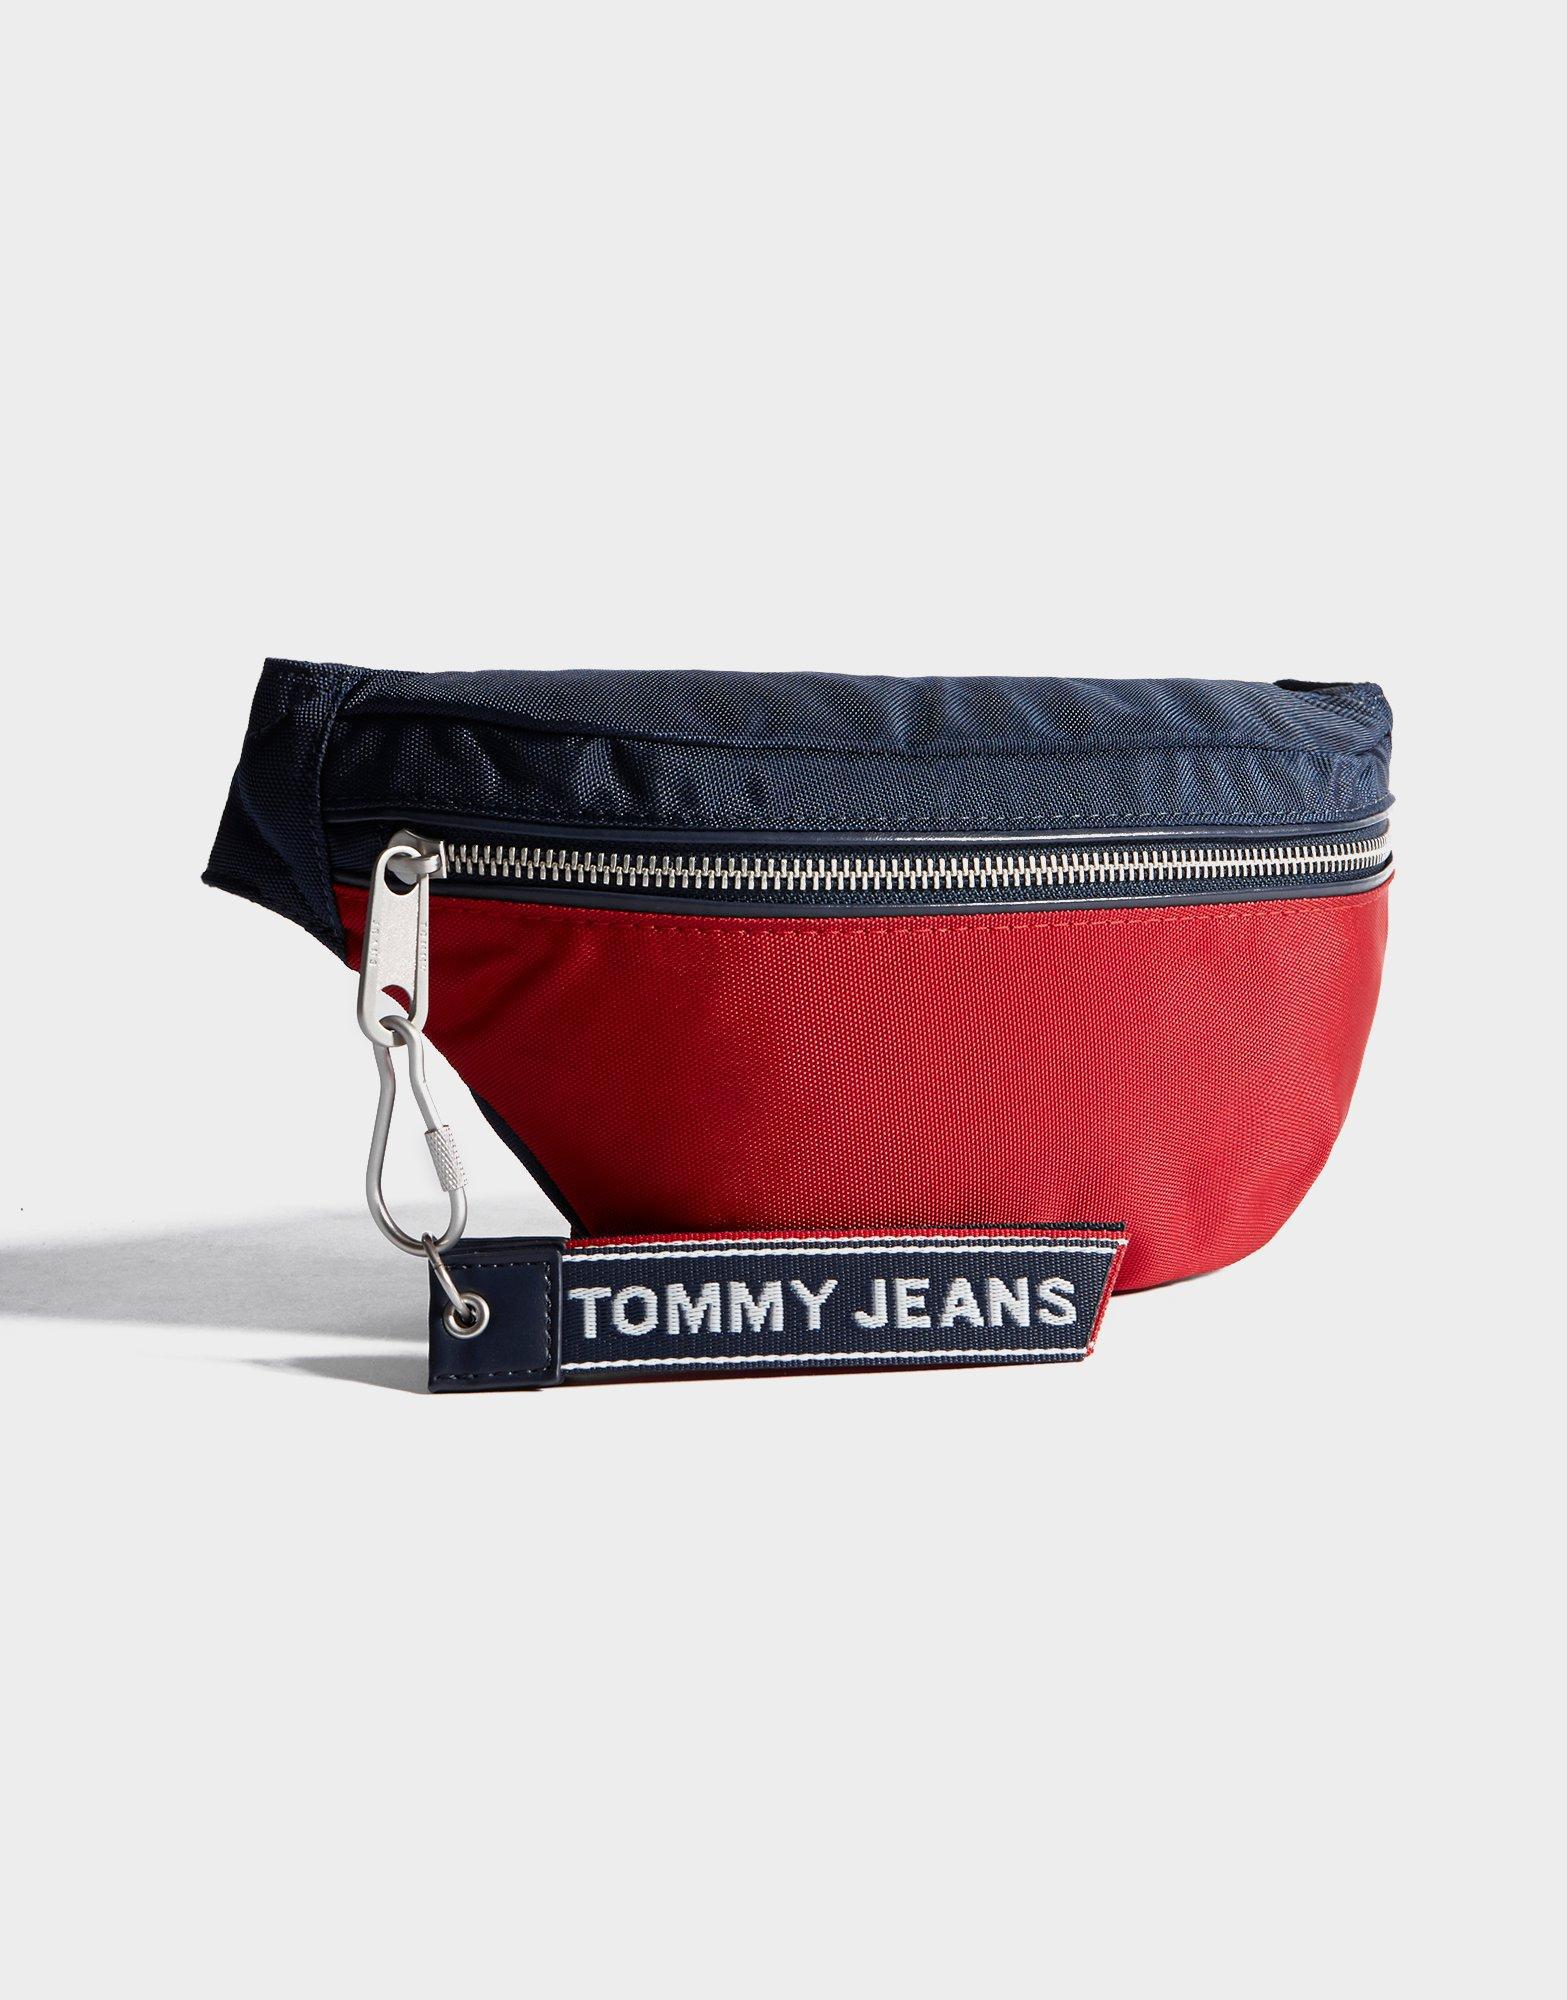 Tommy Hilfiger Waist Bag, Buy Now, Shop, 52% OFF, www.acananortheast.com